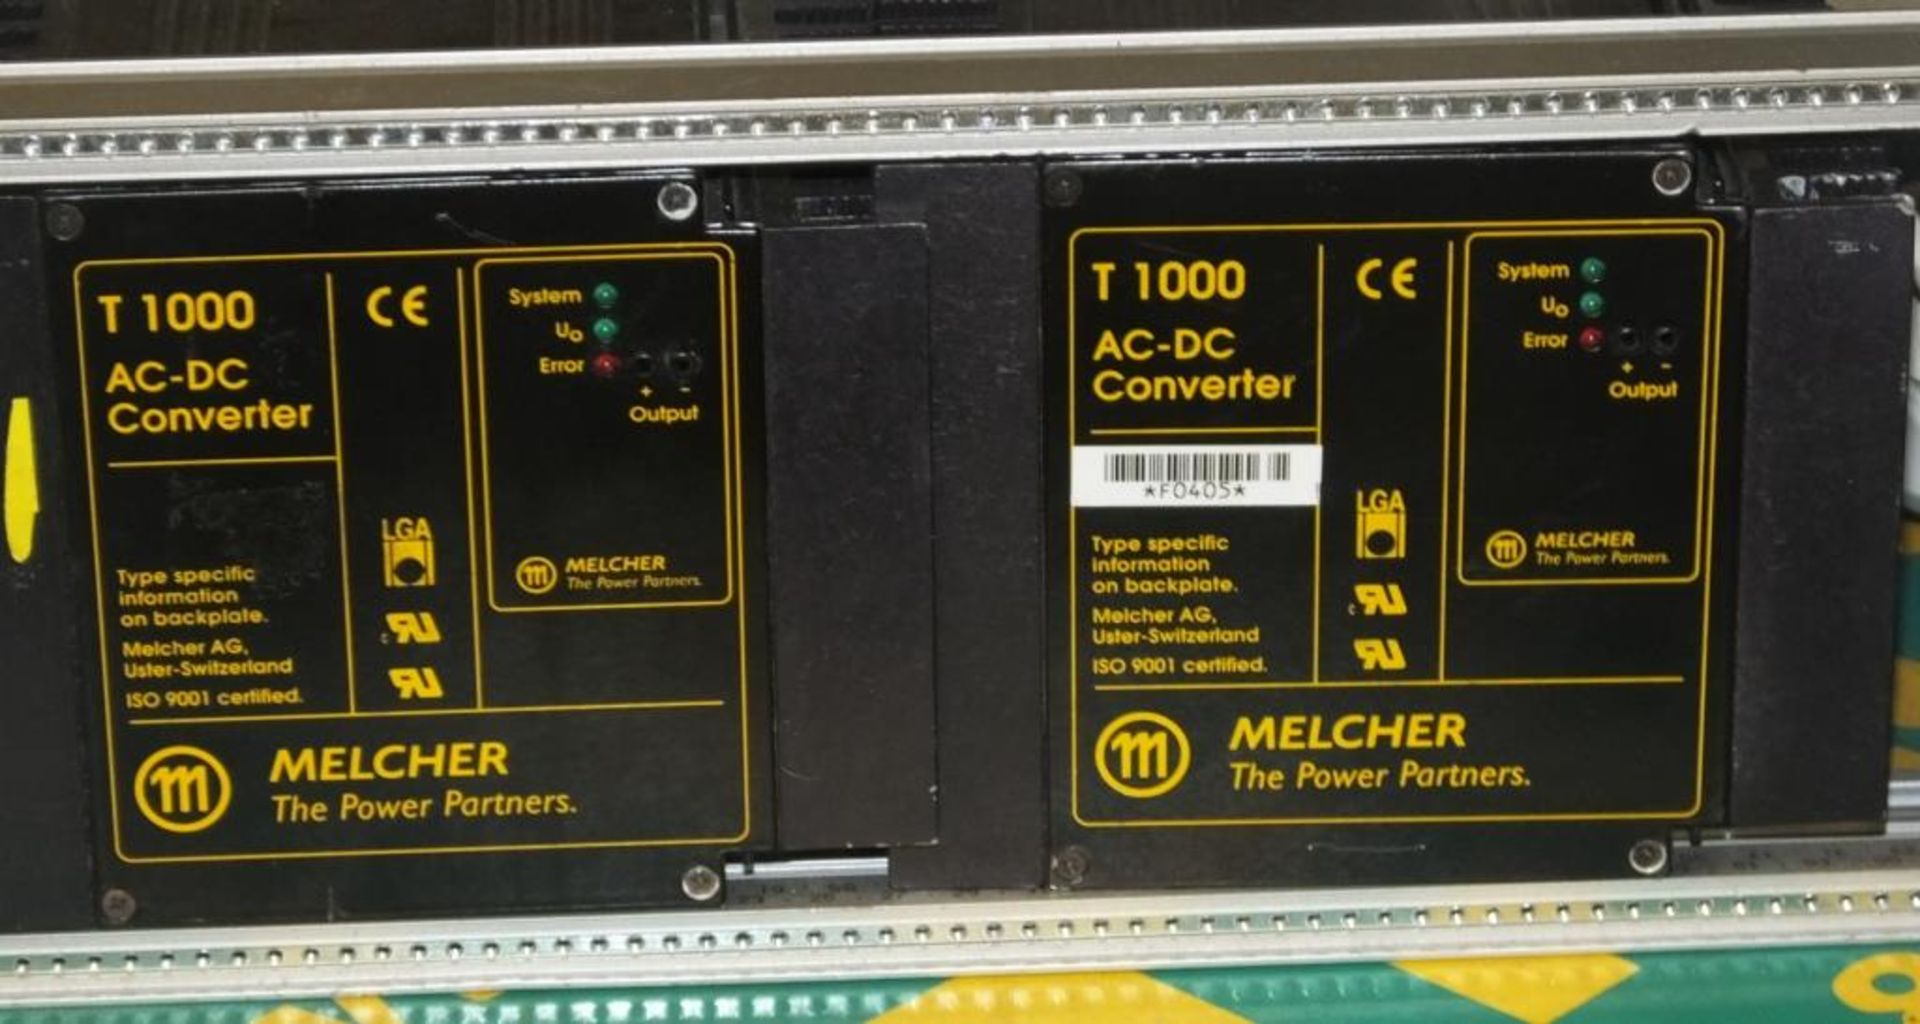 2x Melcher T1000 AC-DC convertors in rack mount - Image 2 of 2